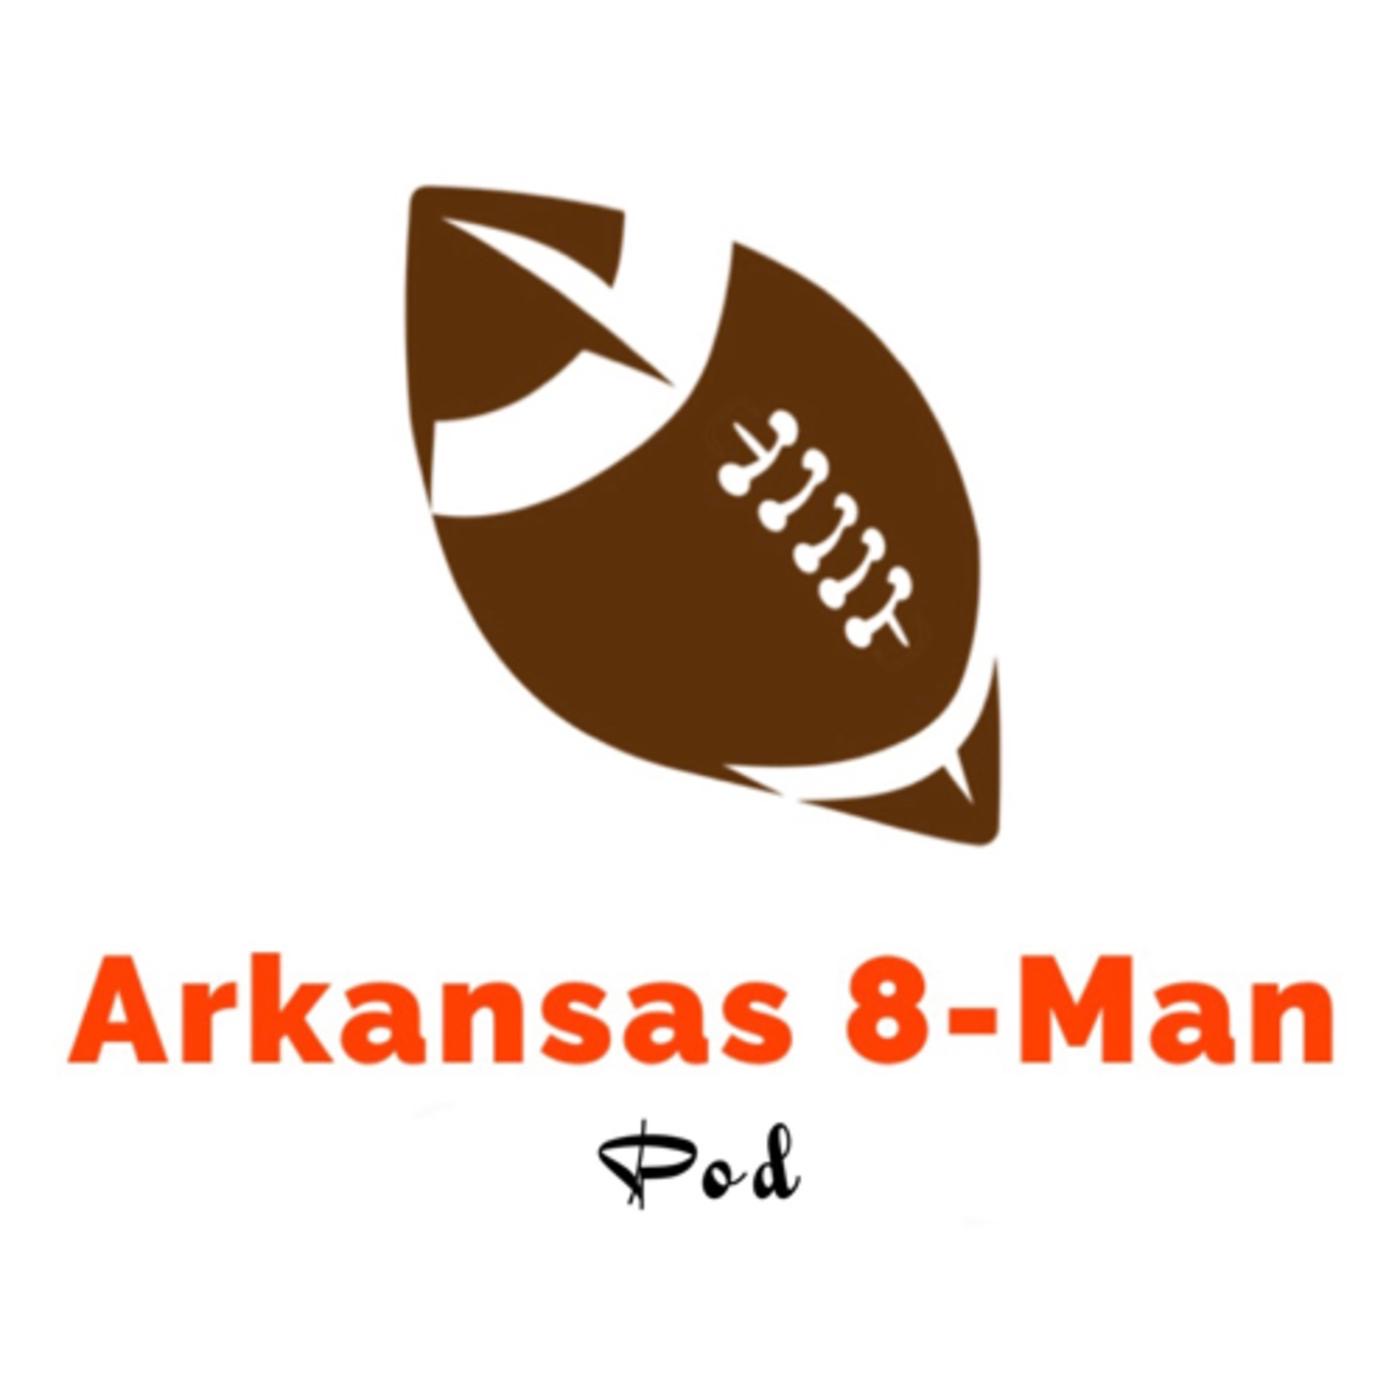 Arkansas 8-Man Pod Episode 5